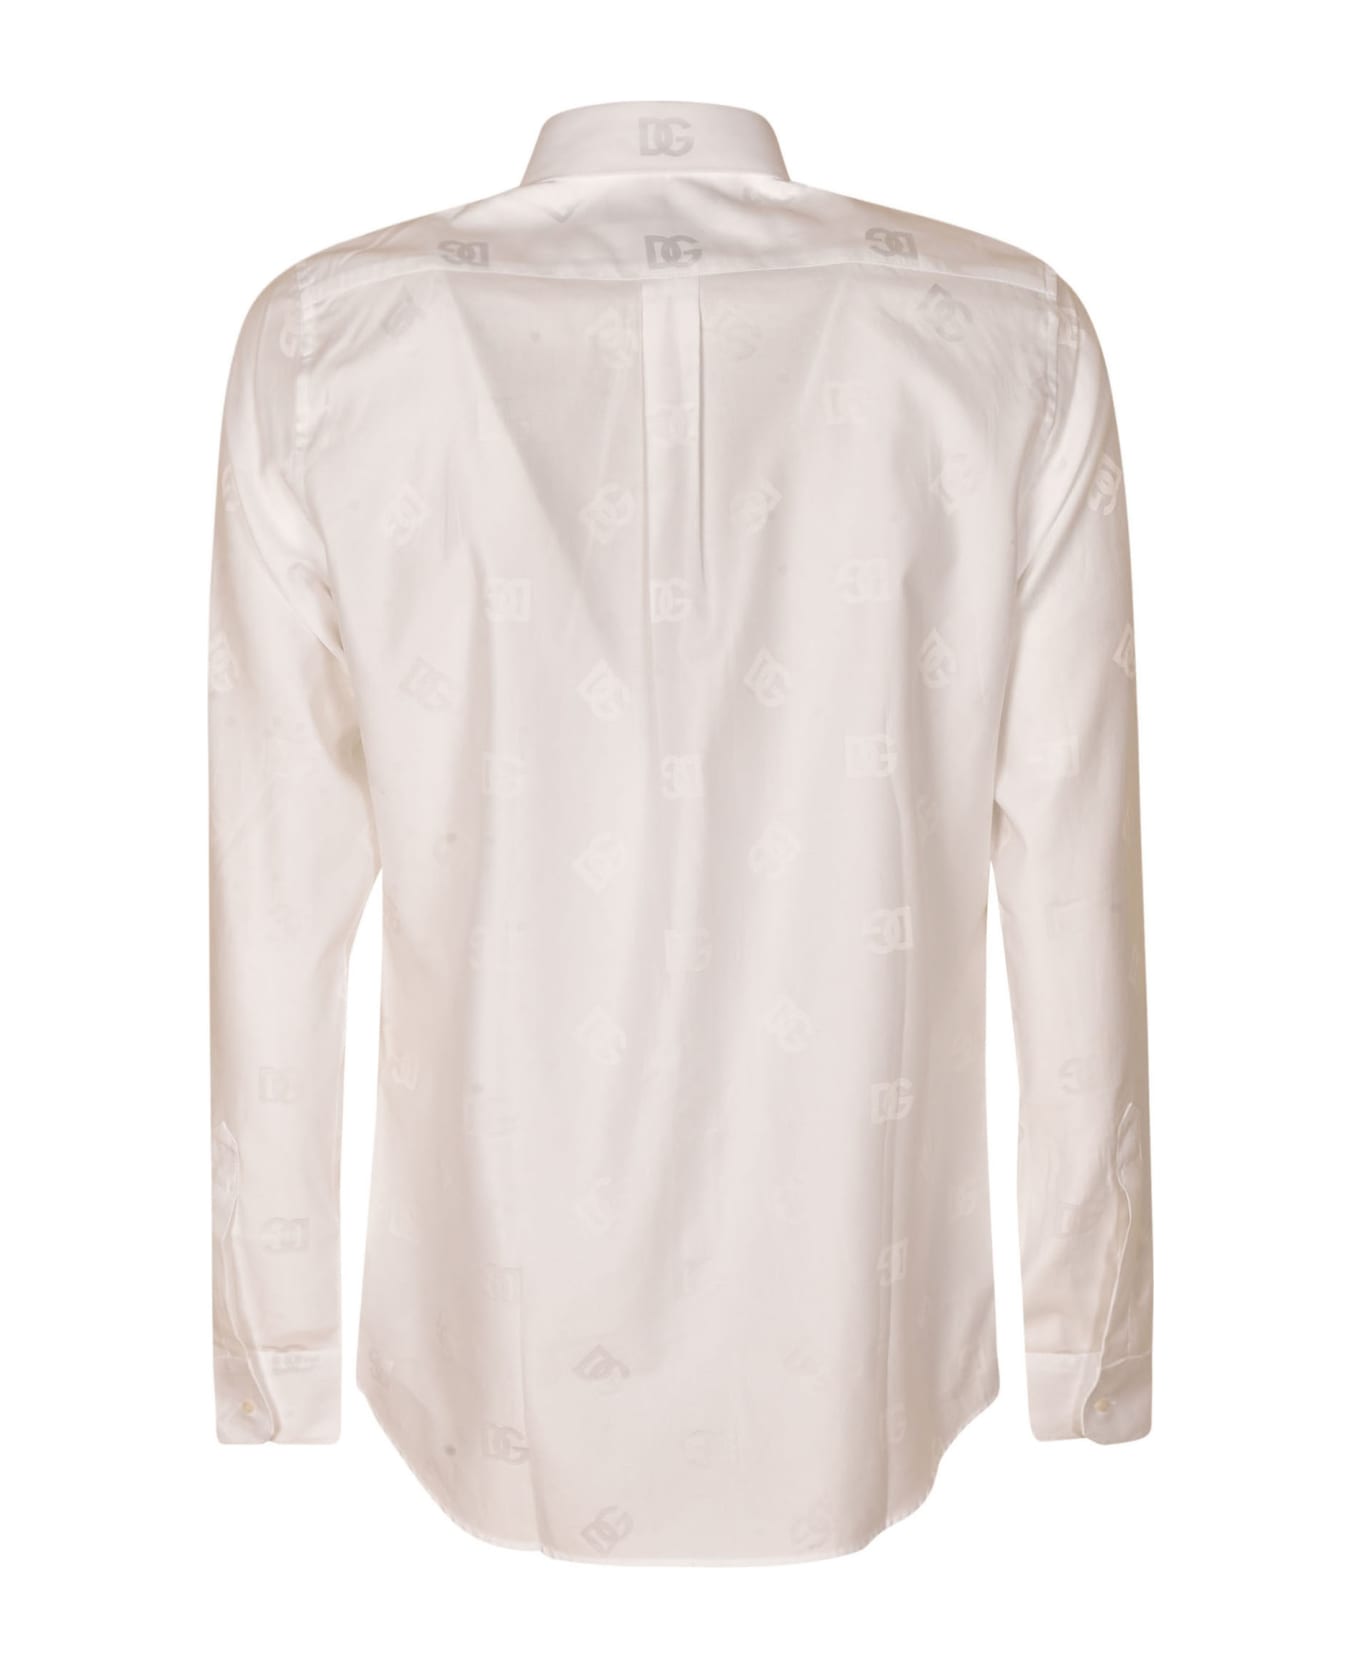 Dolce & Gabbana Long-sleeved Shirt - White